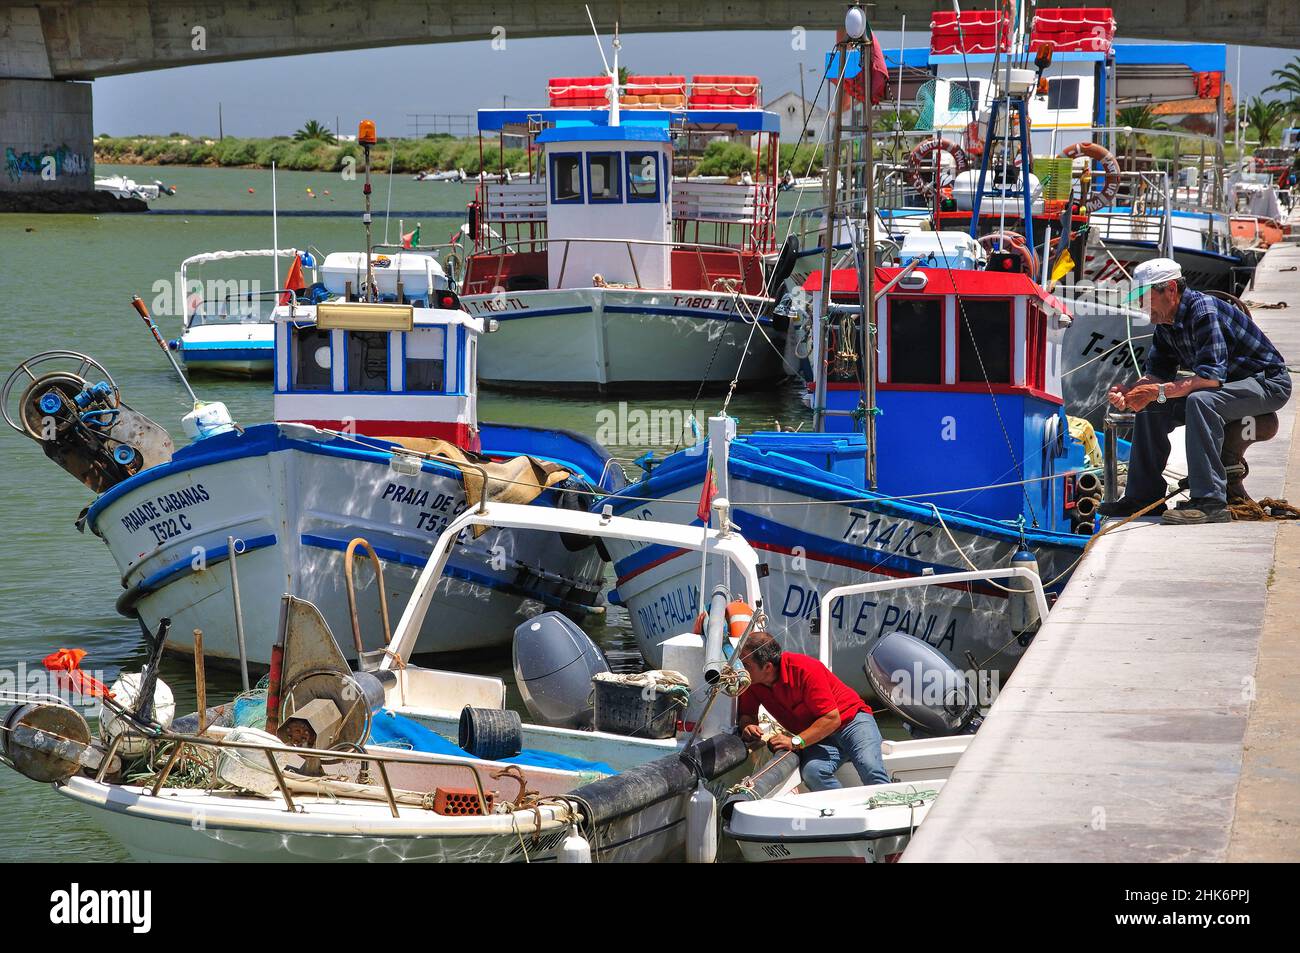 Fischerboote auf dem Fluss Gilao, Tavira, Algarve, Portugal Stockfoto